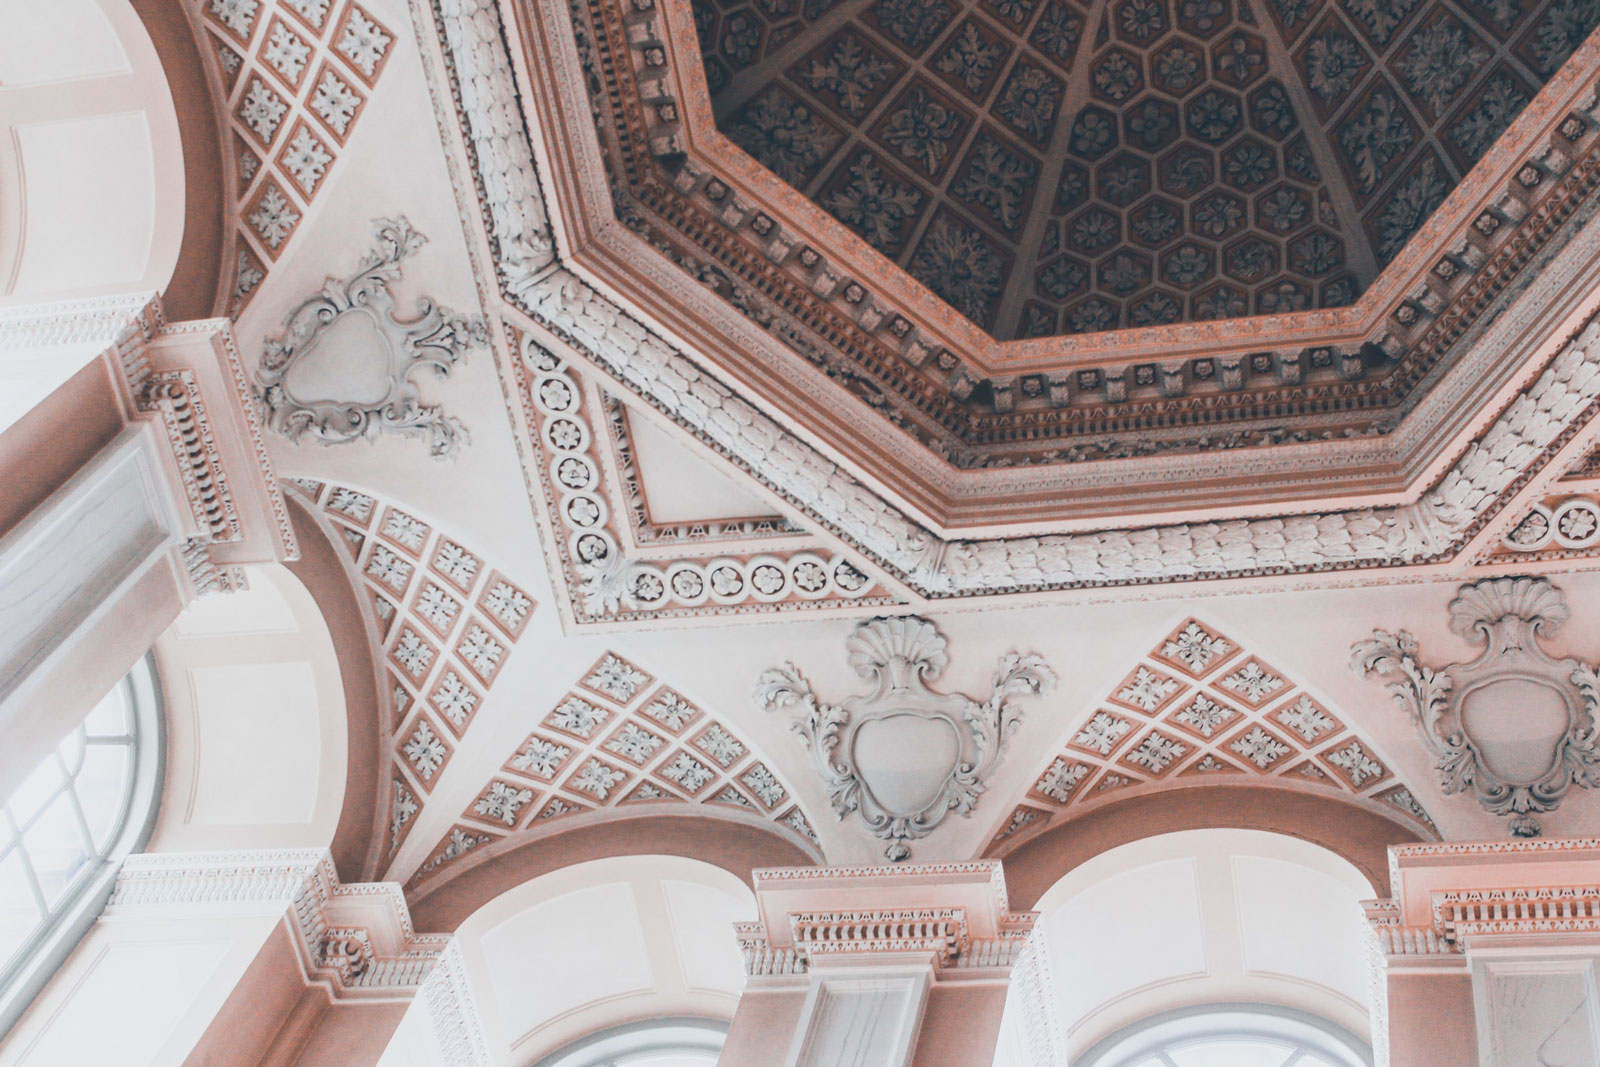 Blenheim Palace Ceiling